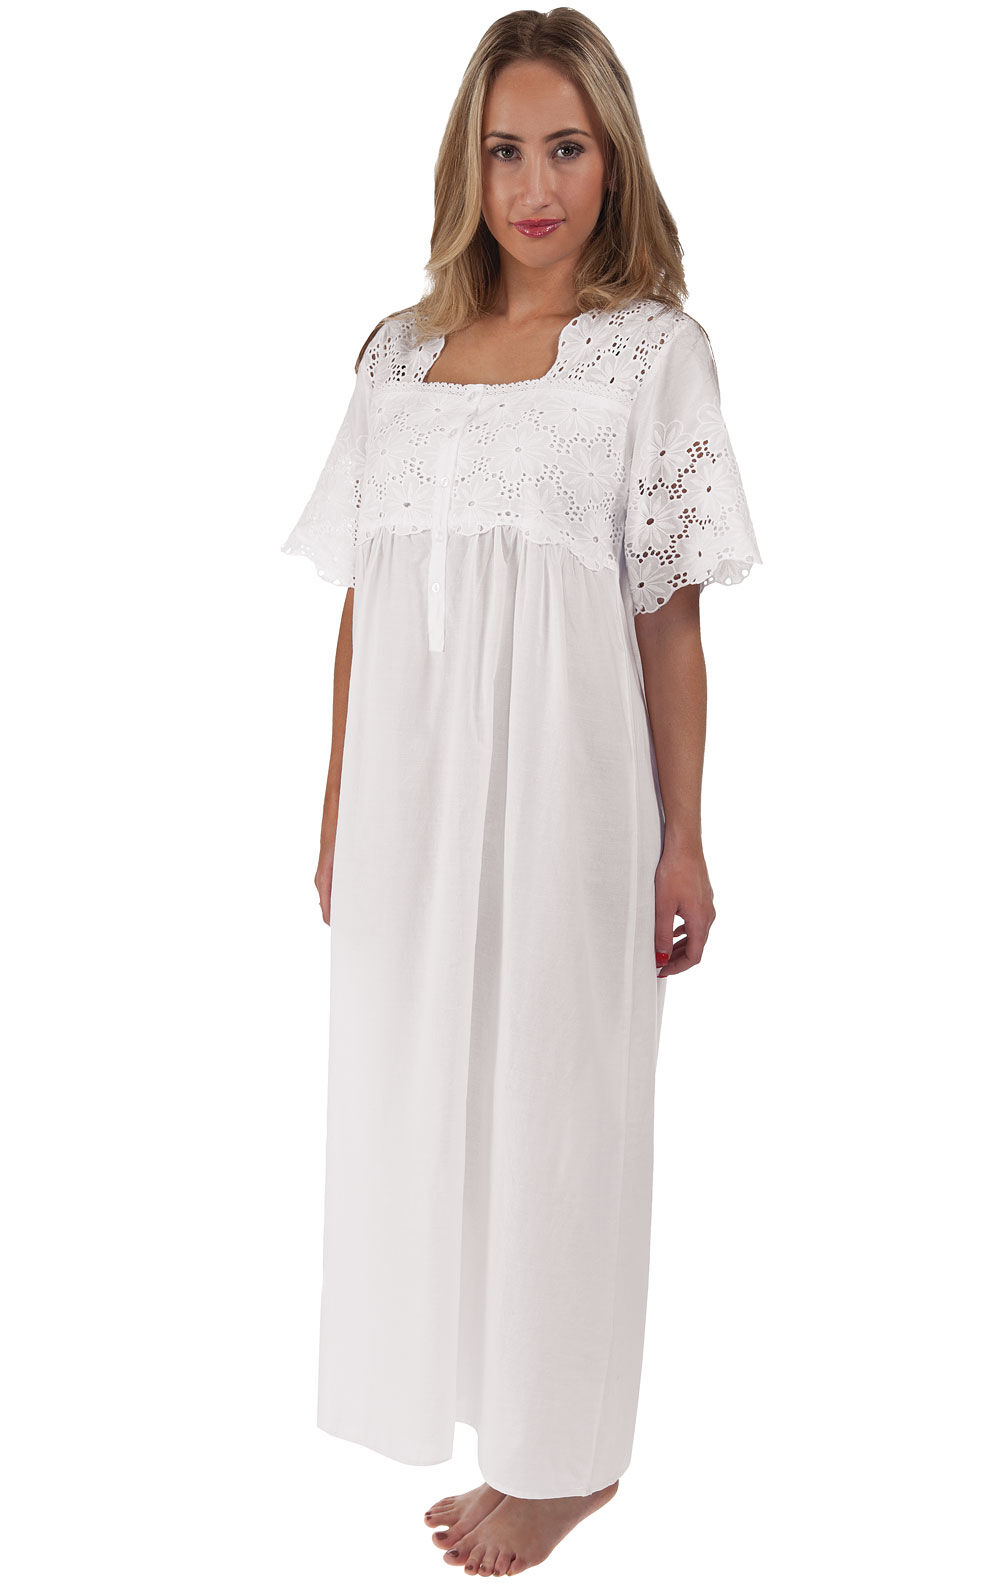 Elizabeth The 1 for U 100% Cotton Short Sleeve Ladies Nightdgown